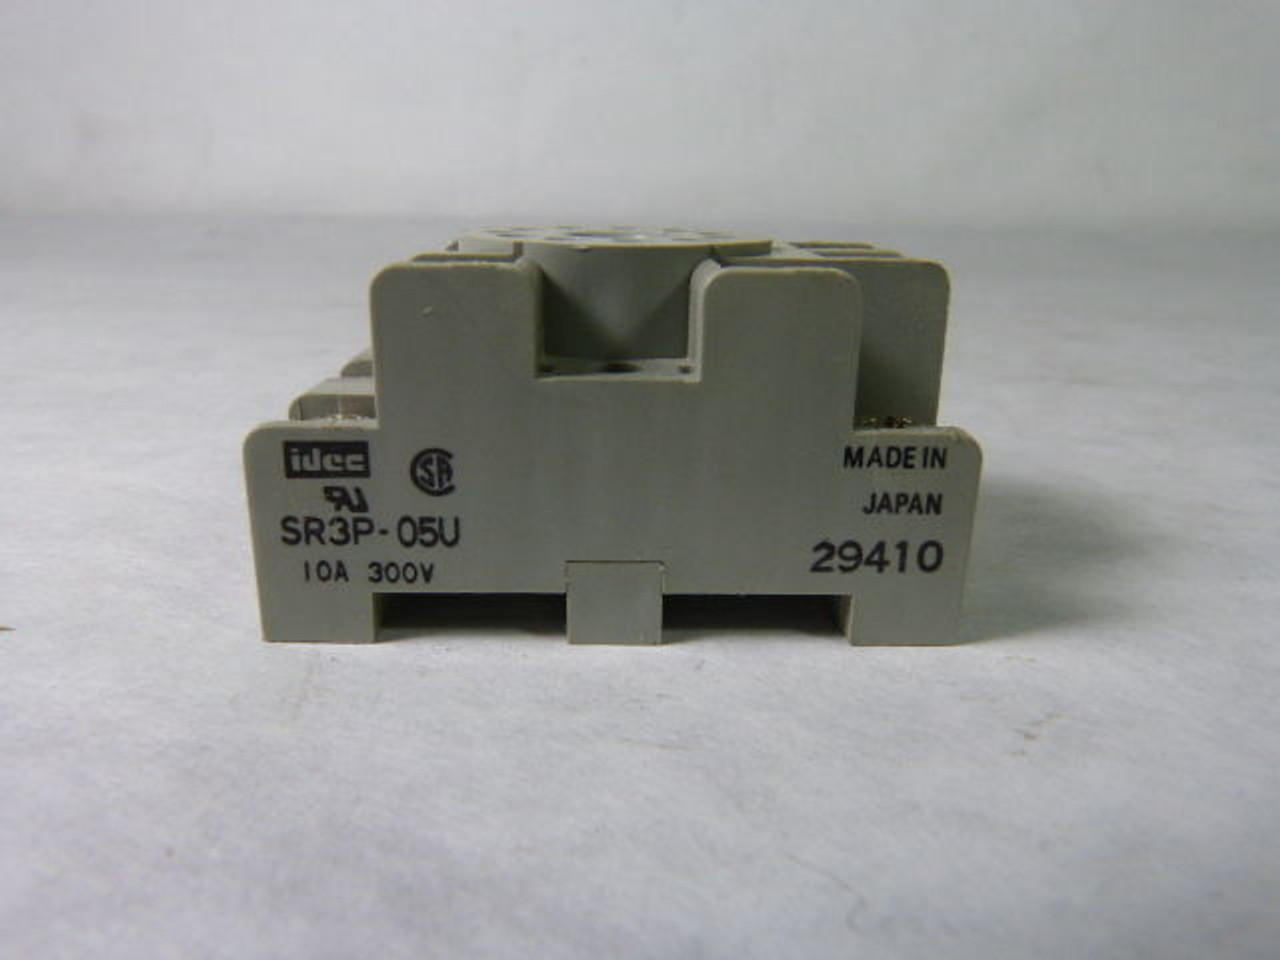 IDEC SR3P-05U Relay Socket for DIN Rail USED